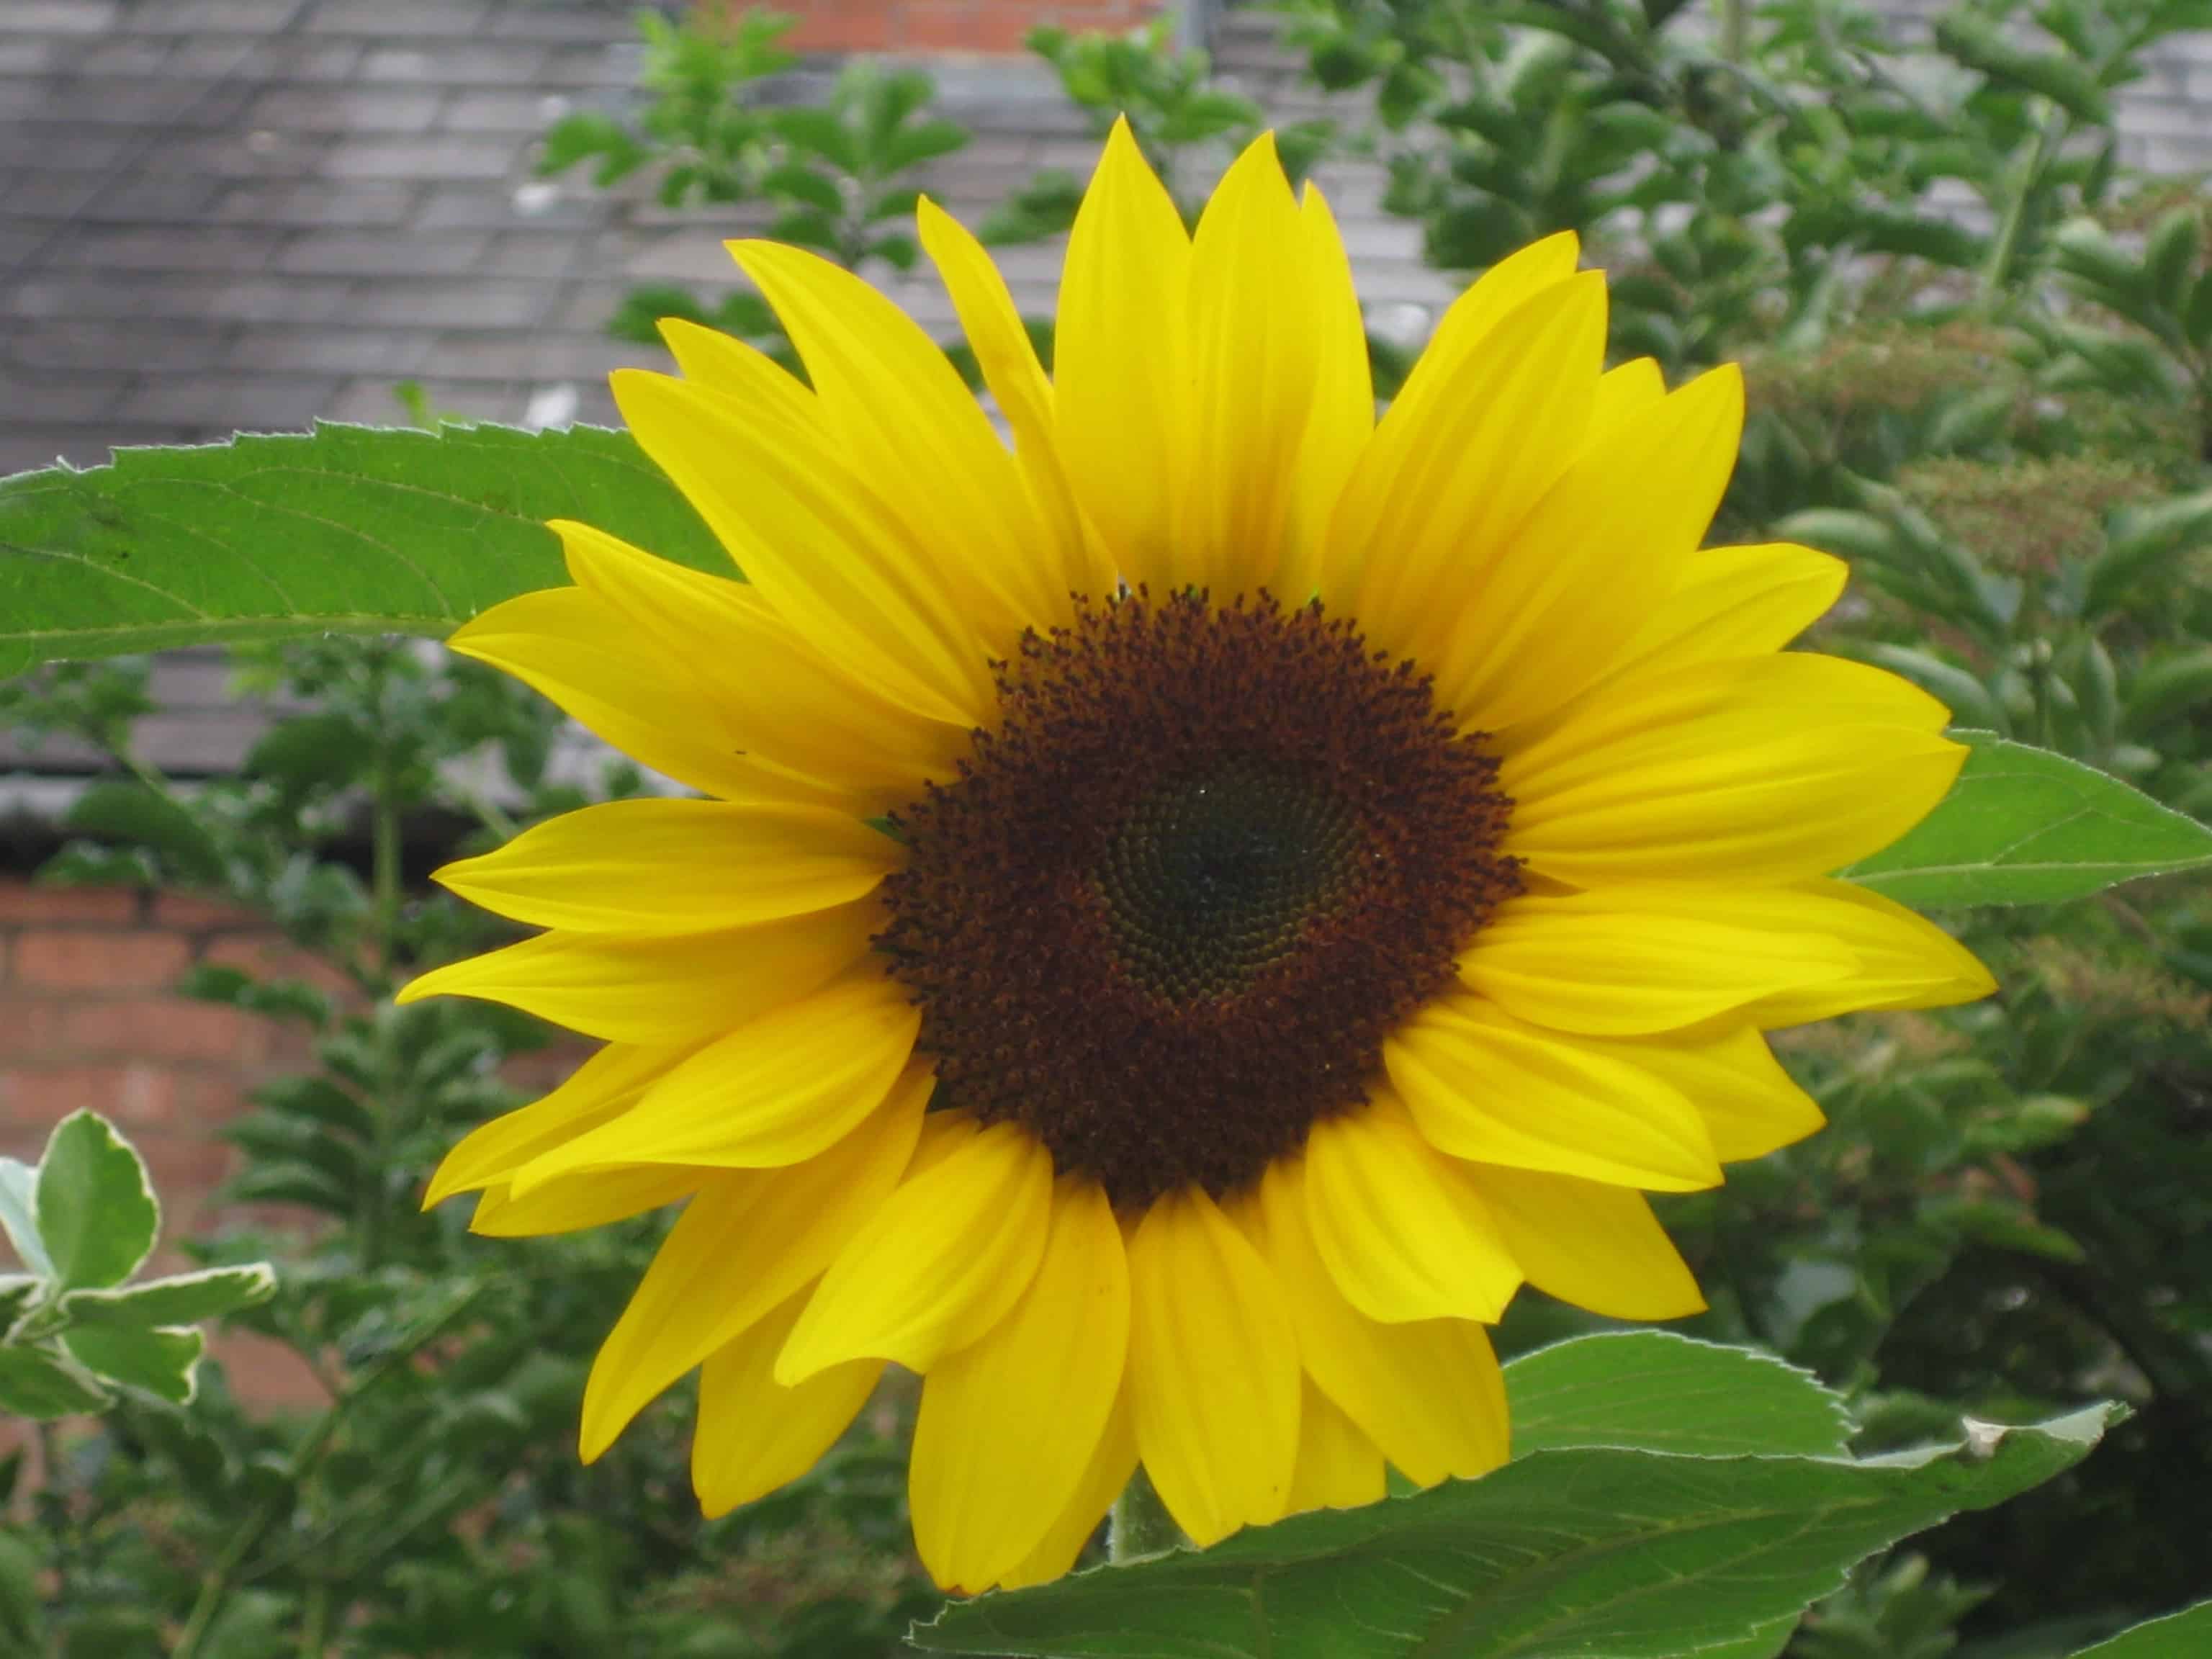 The sunflower